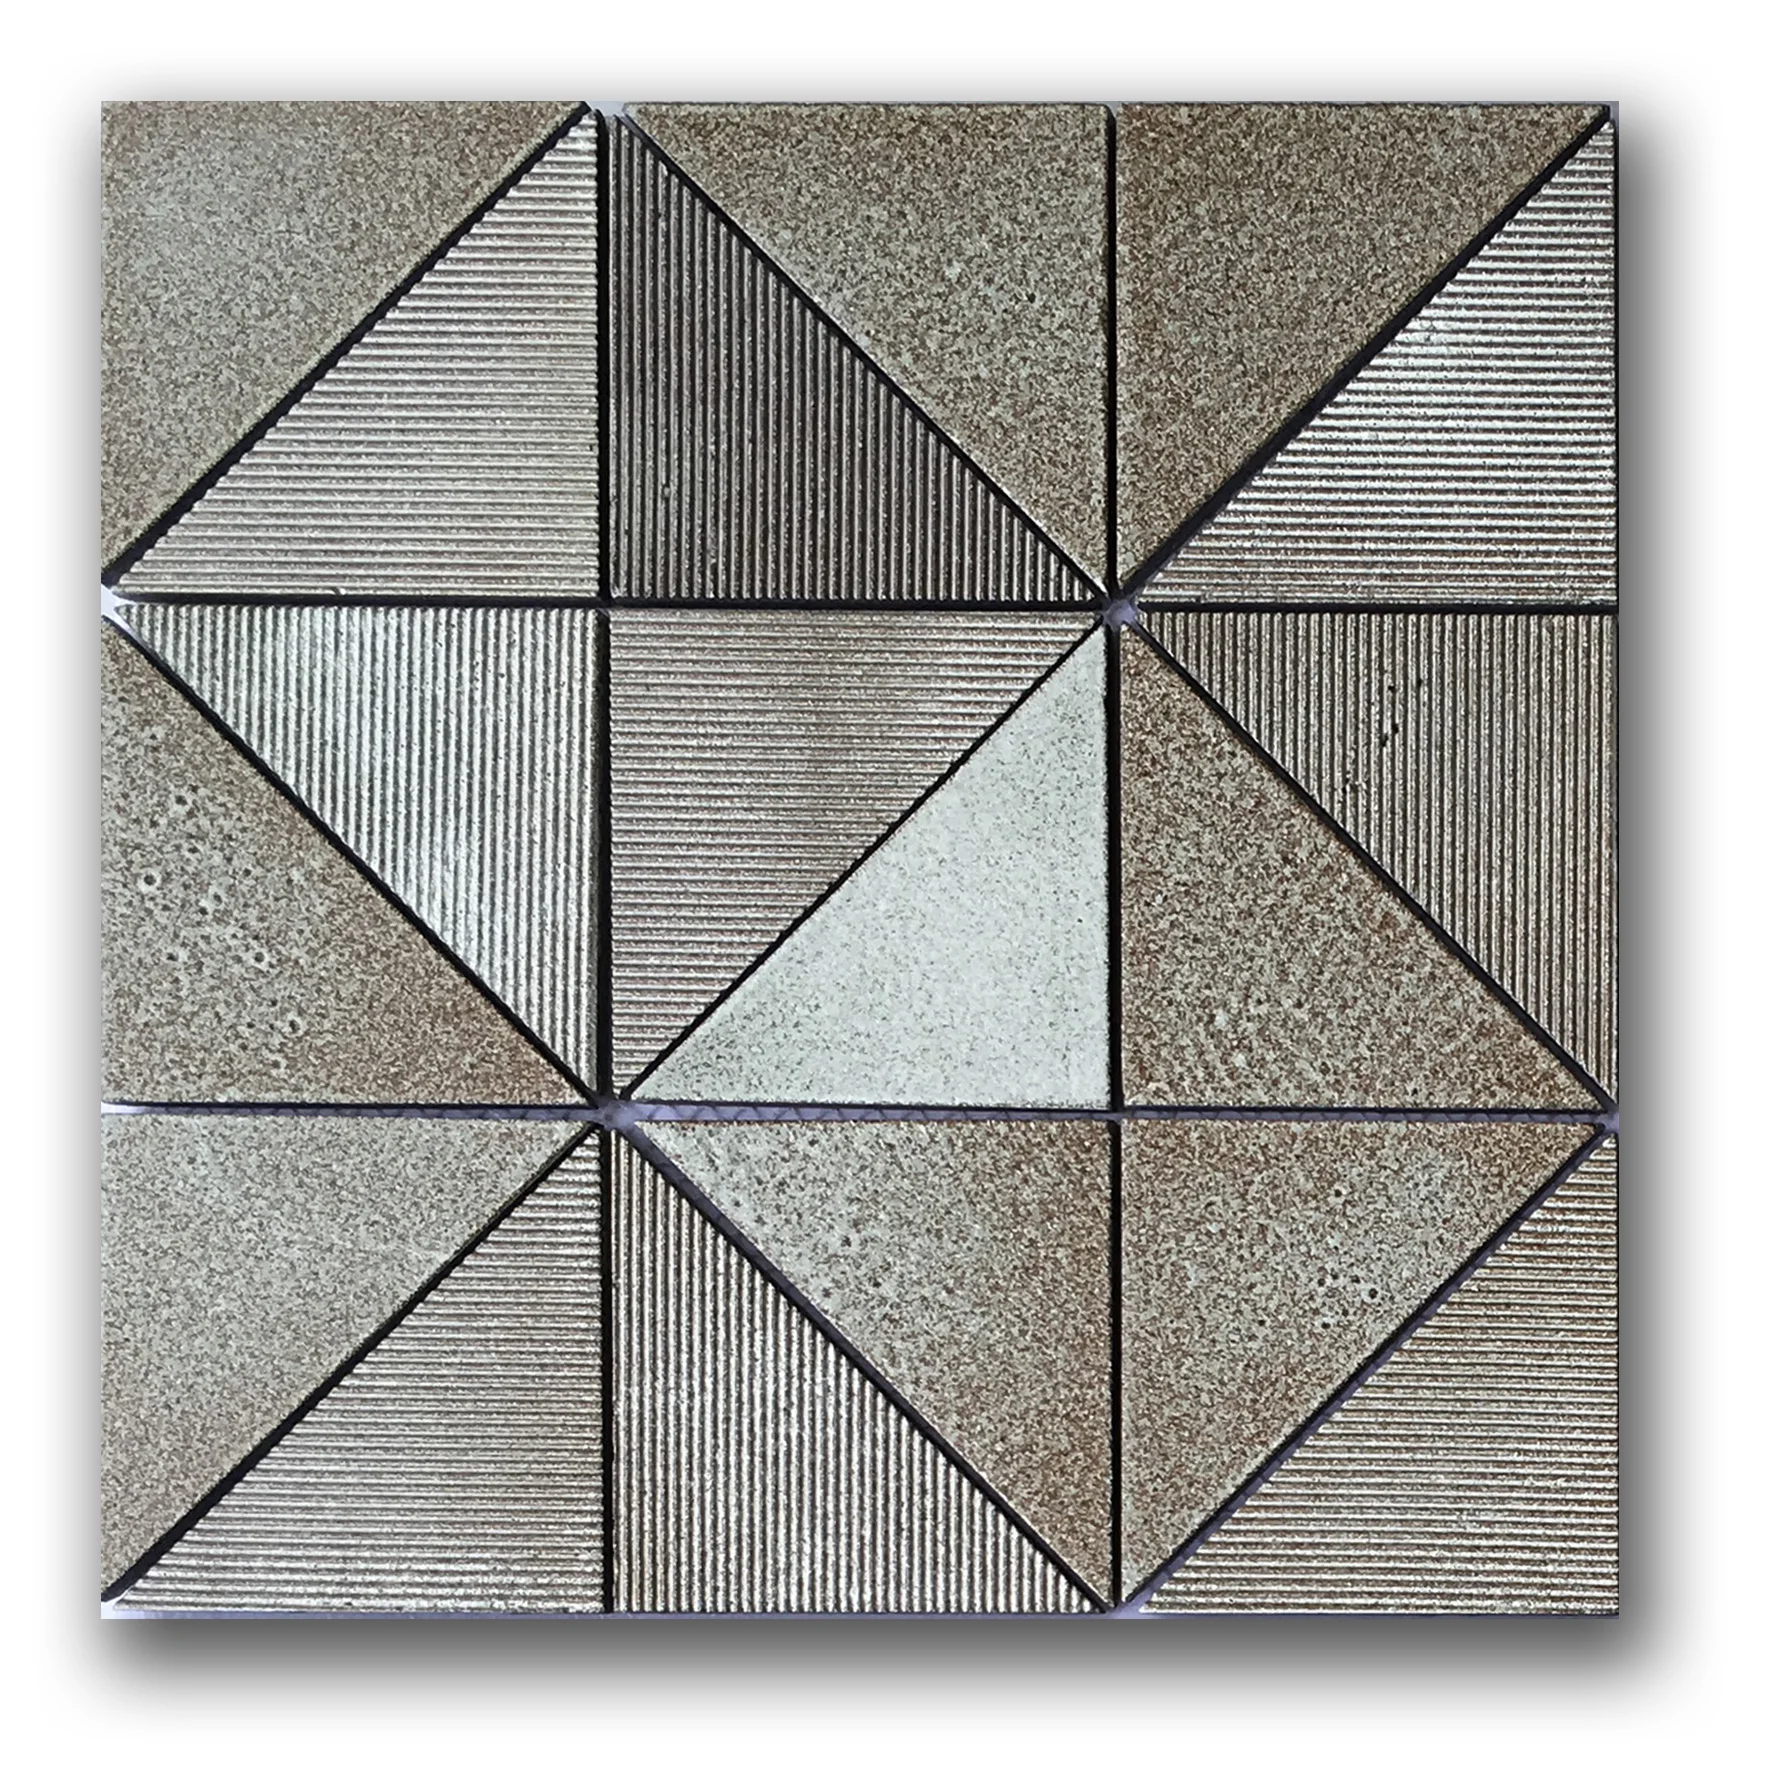 2020 hot sale stone mix mosaic tiles for kitchen backsplash